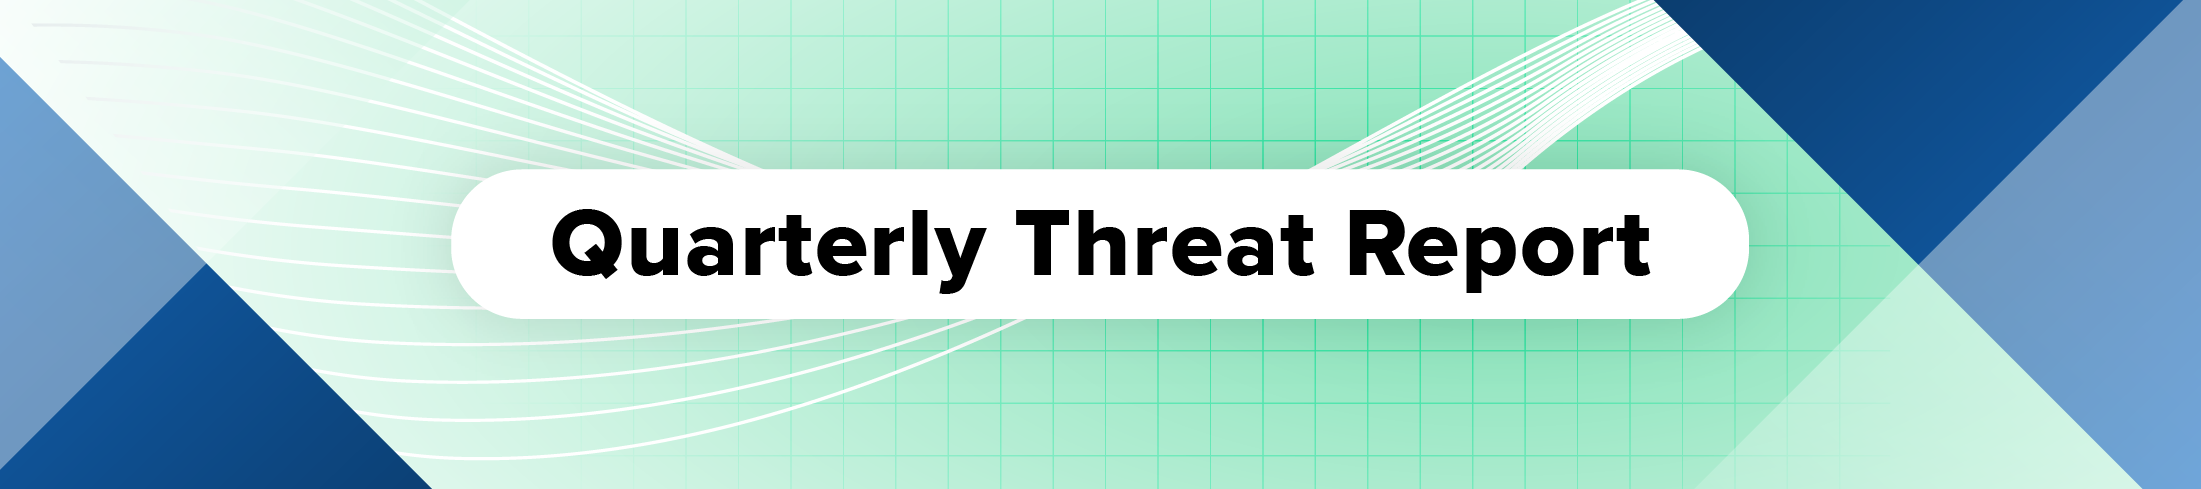 Quarterly Threat Report Blog series